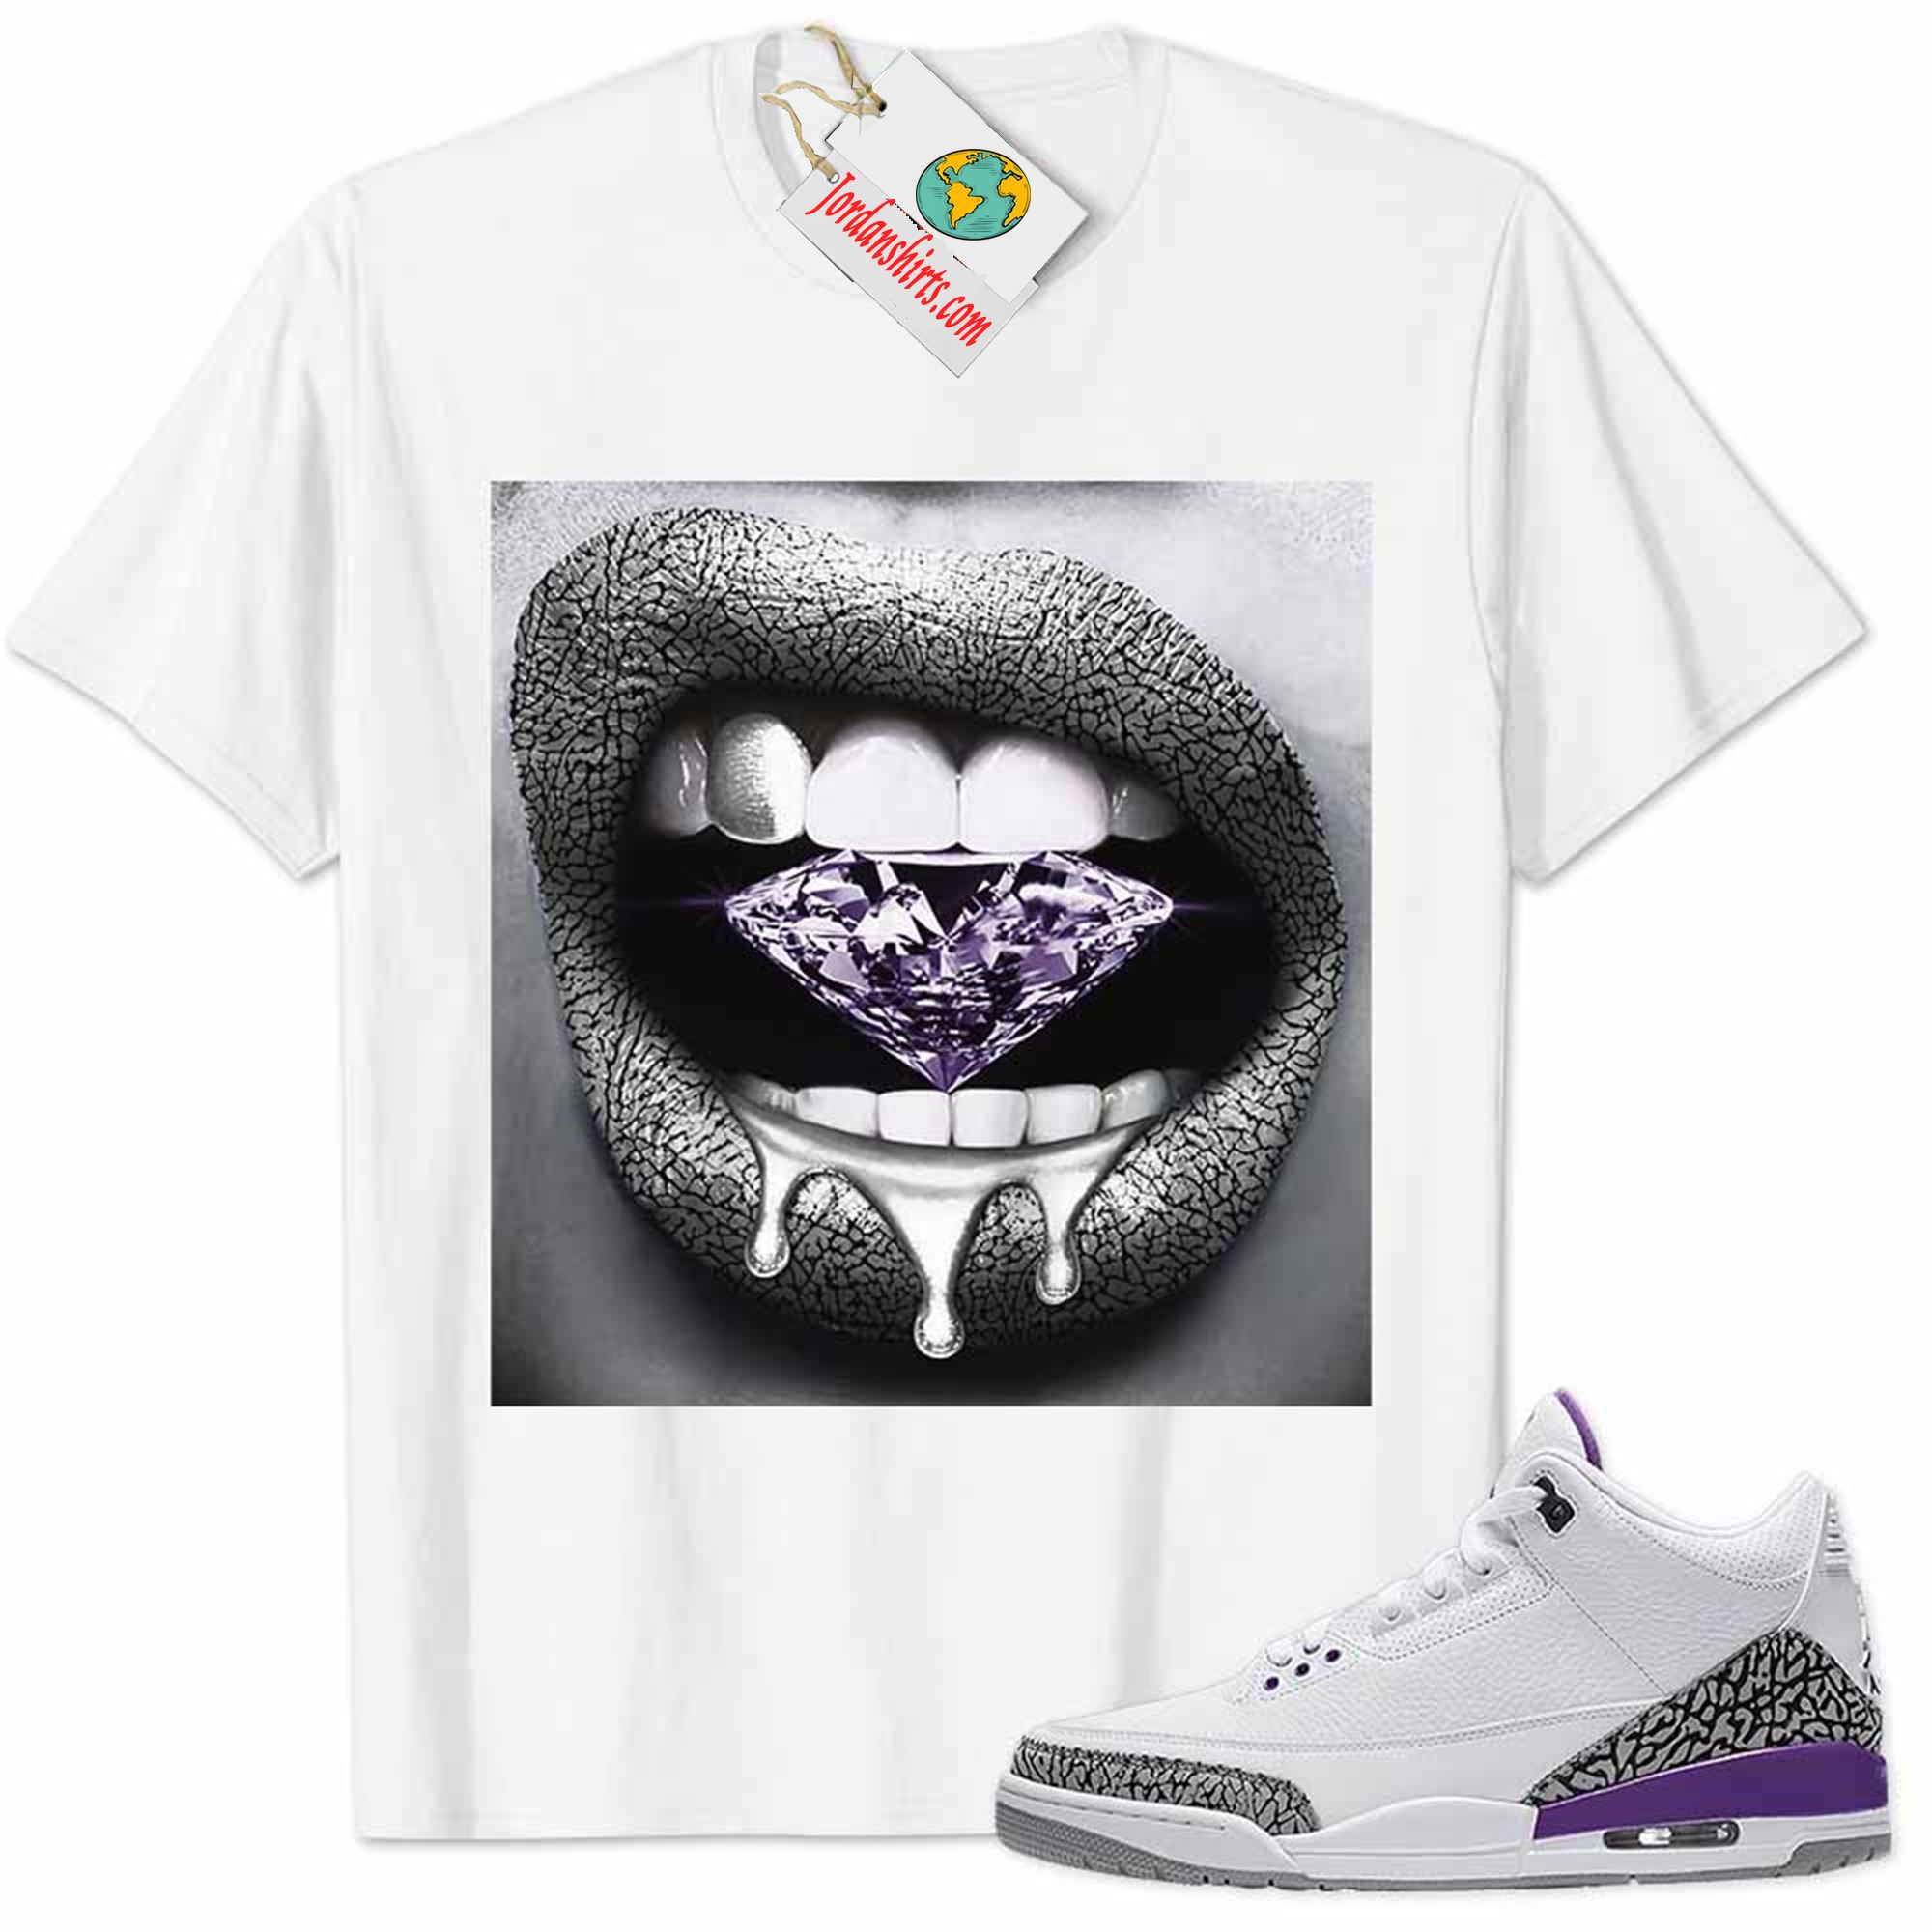 Jordan 3 Shirt, Jordan 3 Wmns Dark Iris Violet Ore Shirt Sexy Lip Bite Diamond Dripping White Size Up To 5xl